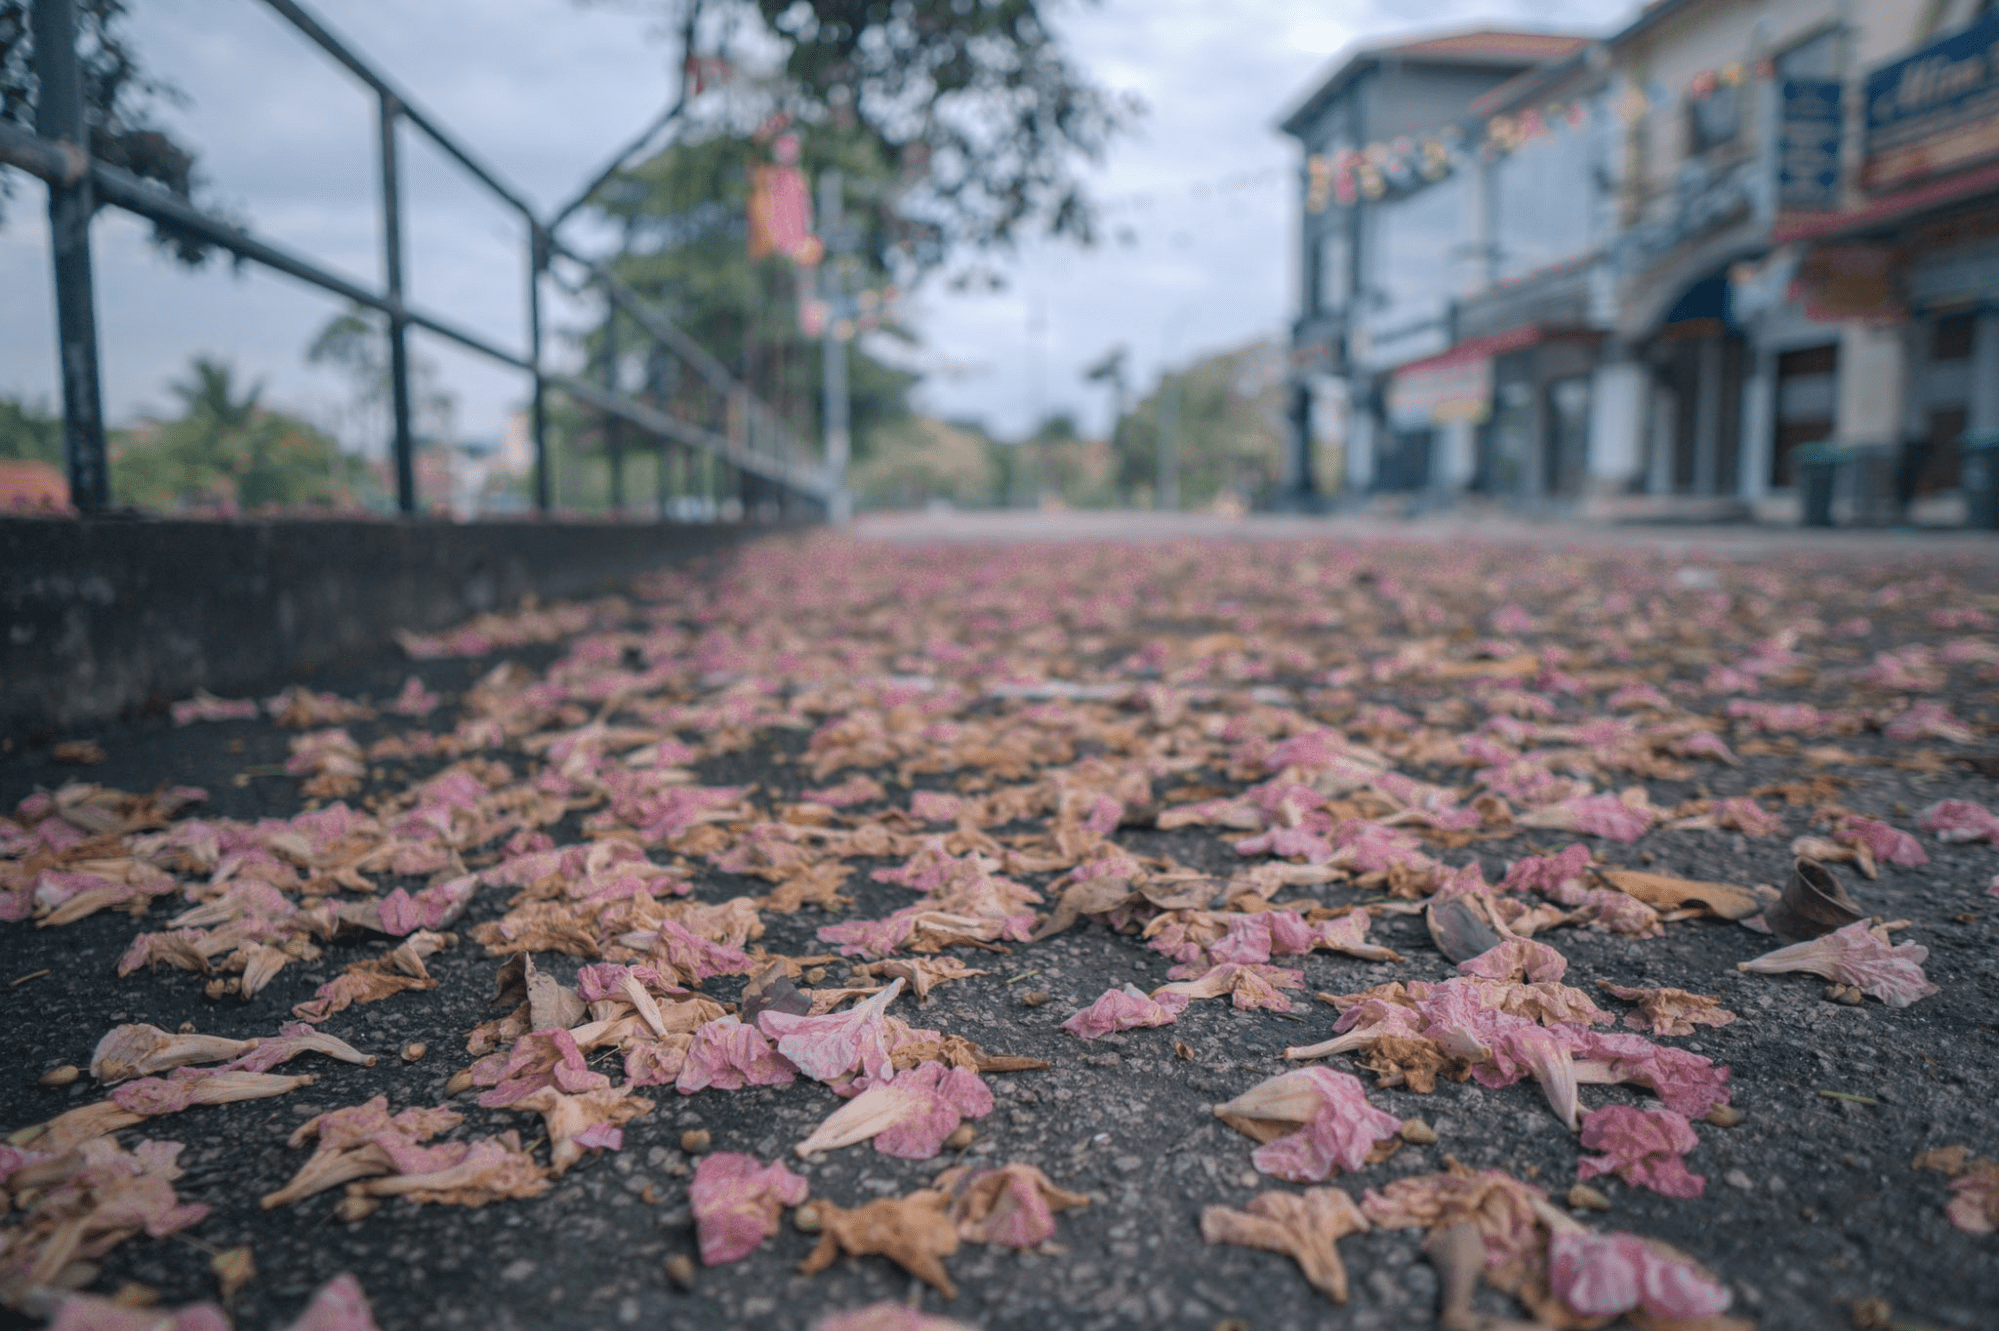 Tecoma trees leave behind trail of flowers on cars and sidewalks - flowers